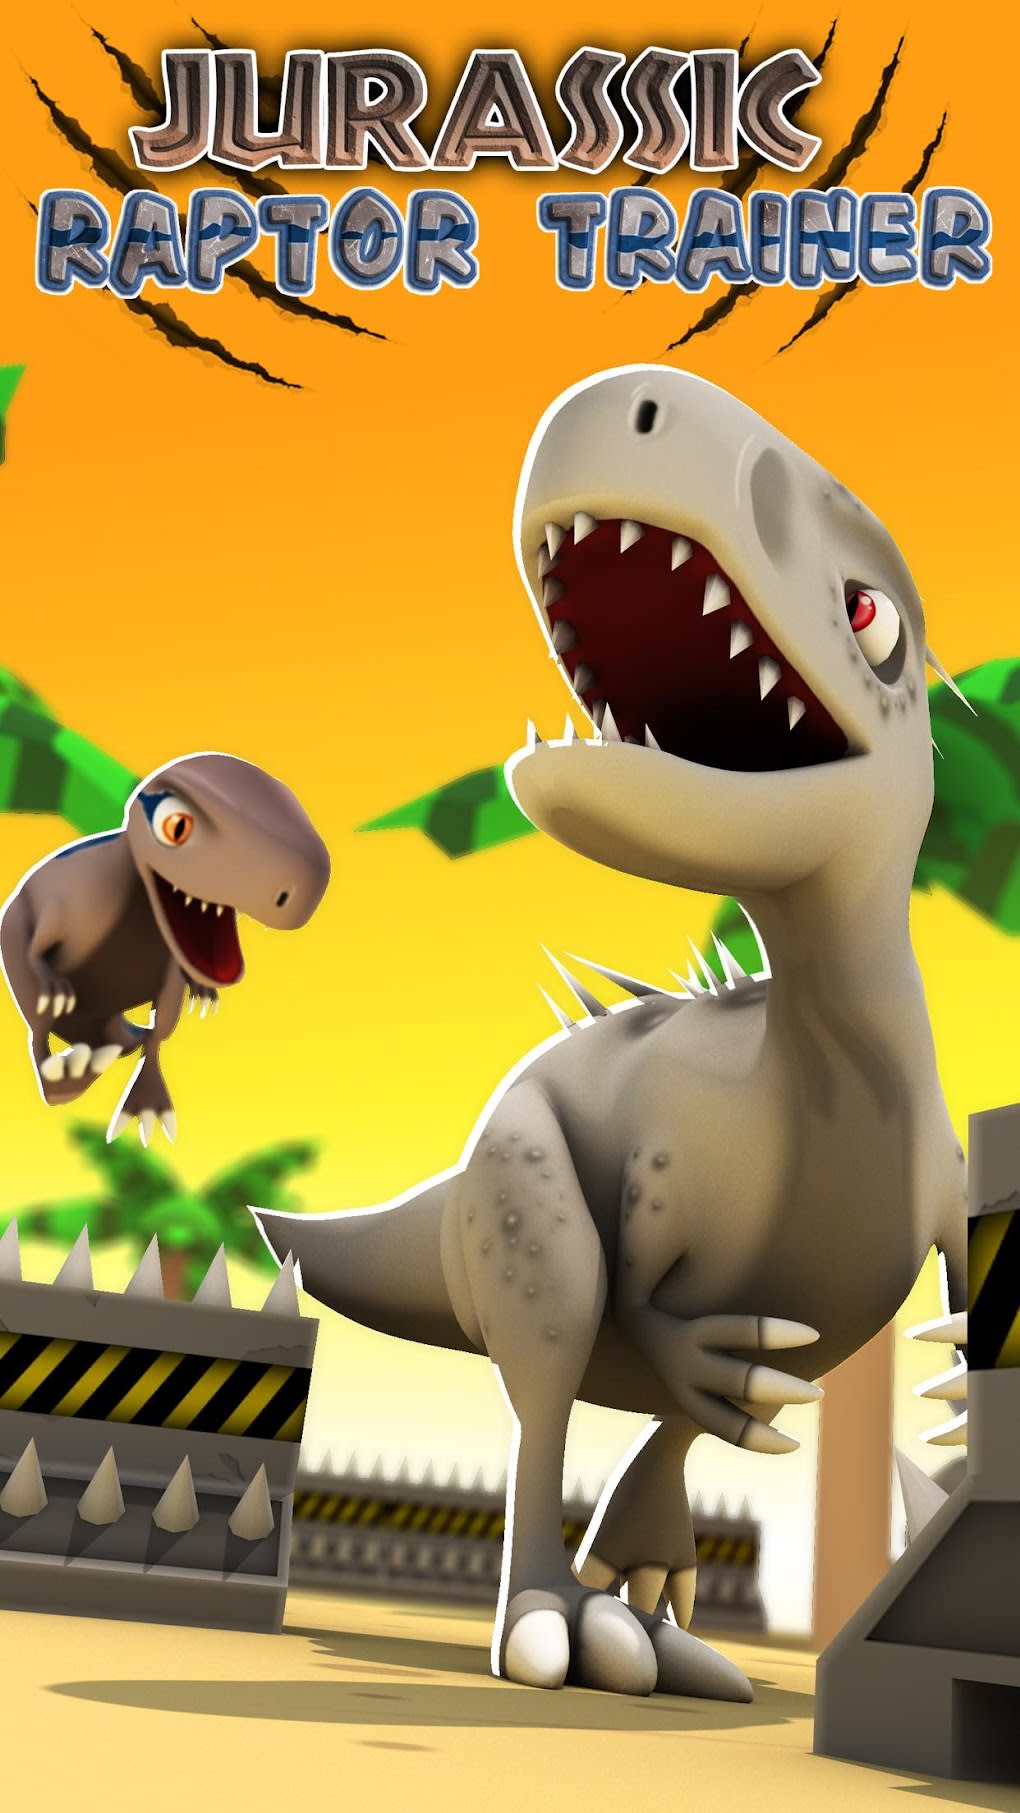 Dinosaur Run 3D - A Jurassic Dino Race Adventure Free Games by